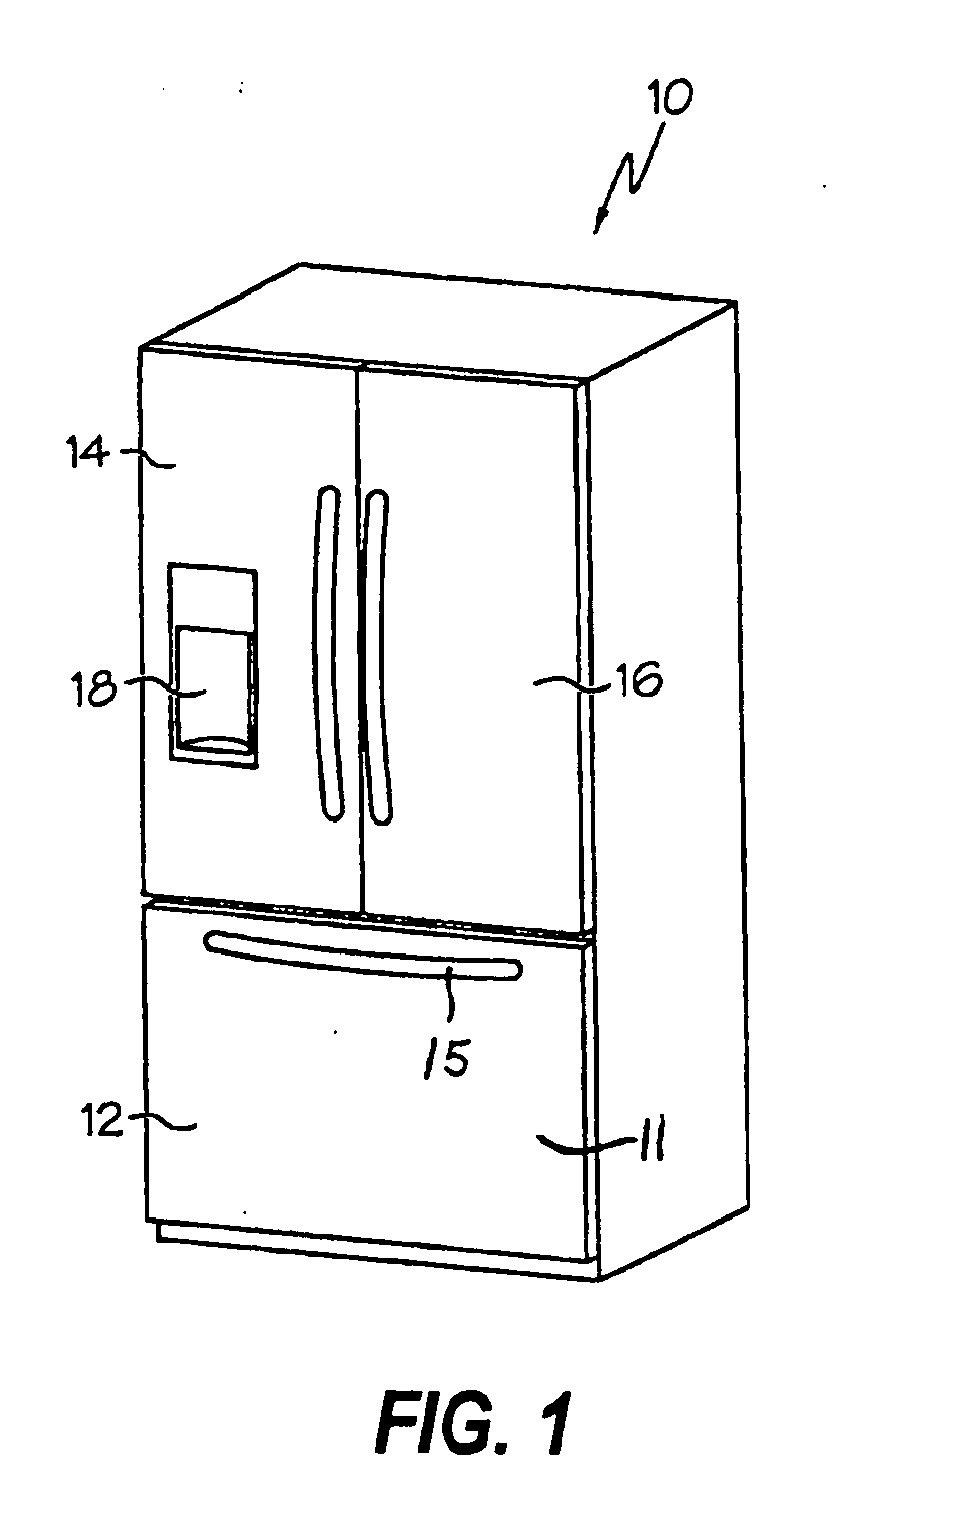 Refrigeration system for refrigeration appliance